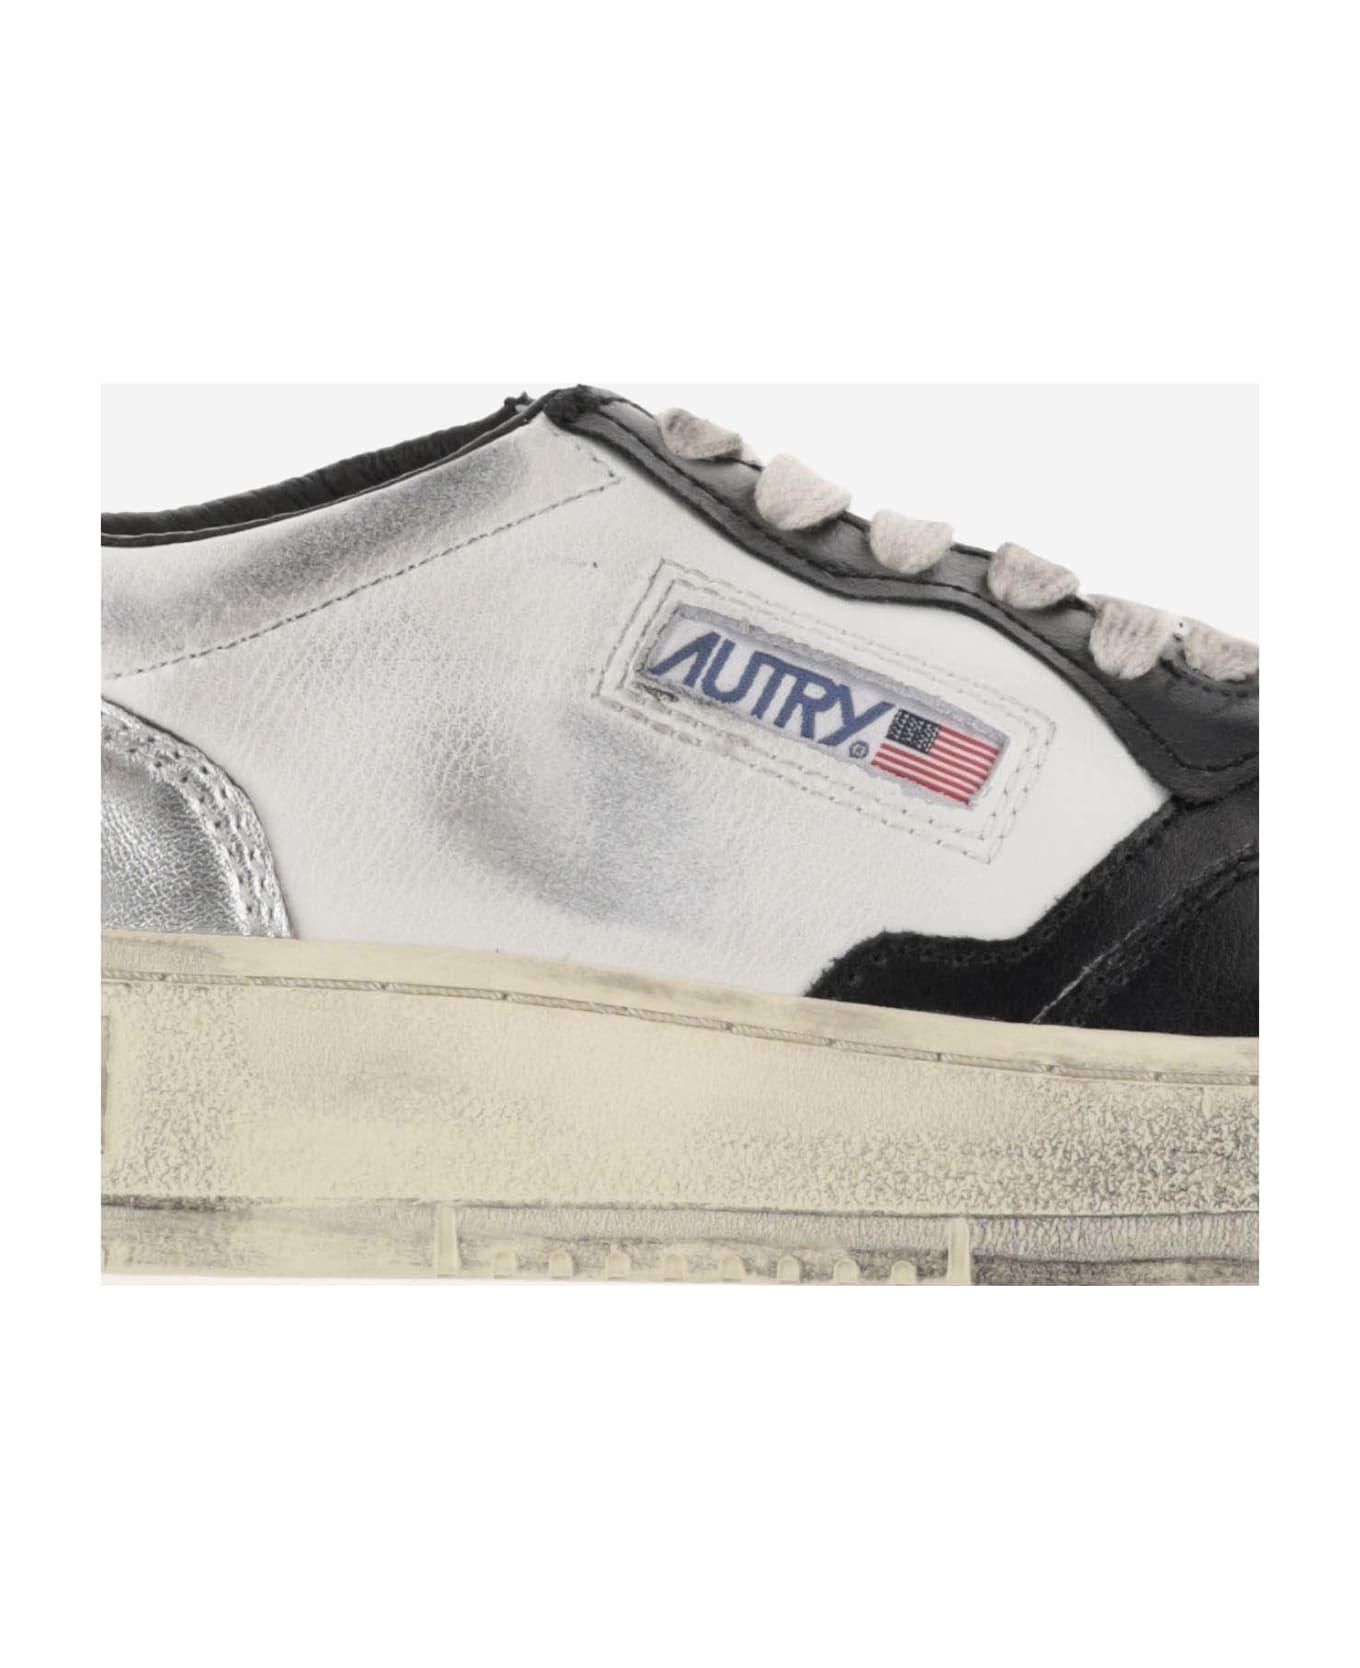 Autry Super Vintage Color-block Sneakers - Bianco/Nero スニーカー